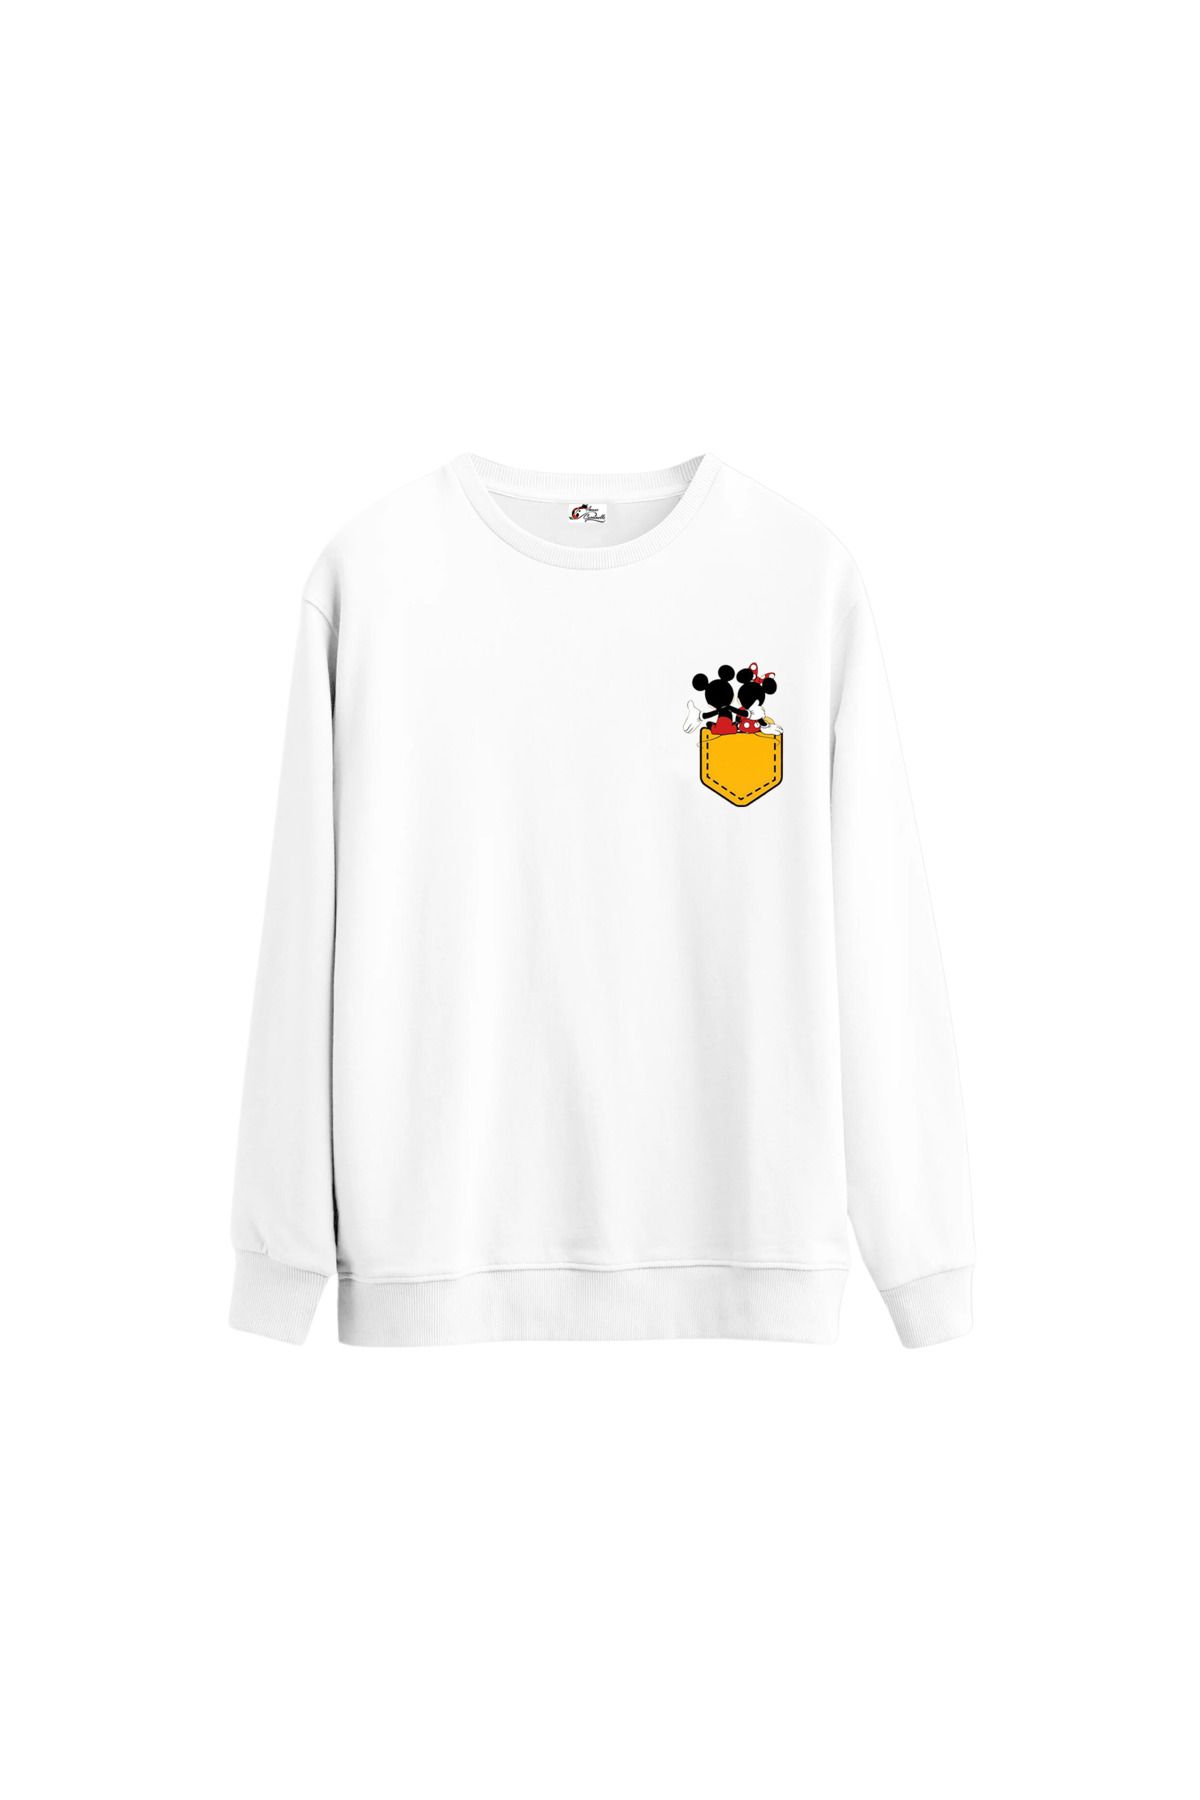 moose Mickey ve Minnie Mouse cep baskılı standart unisex Sweatshirt